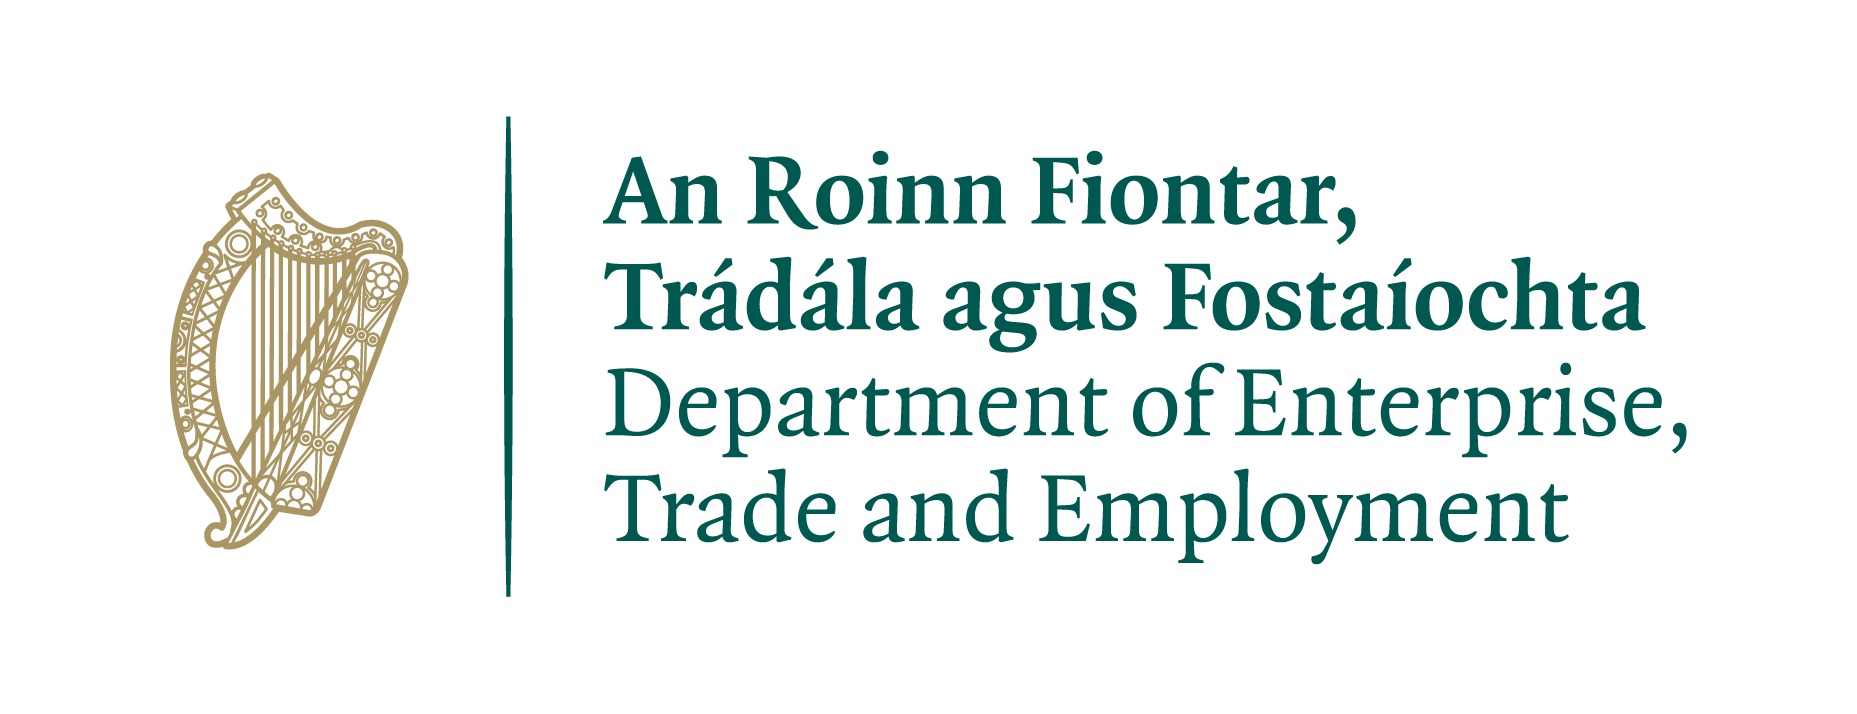 Irish Department of Enterprise Trade and Employment logo